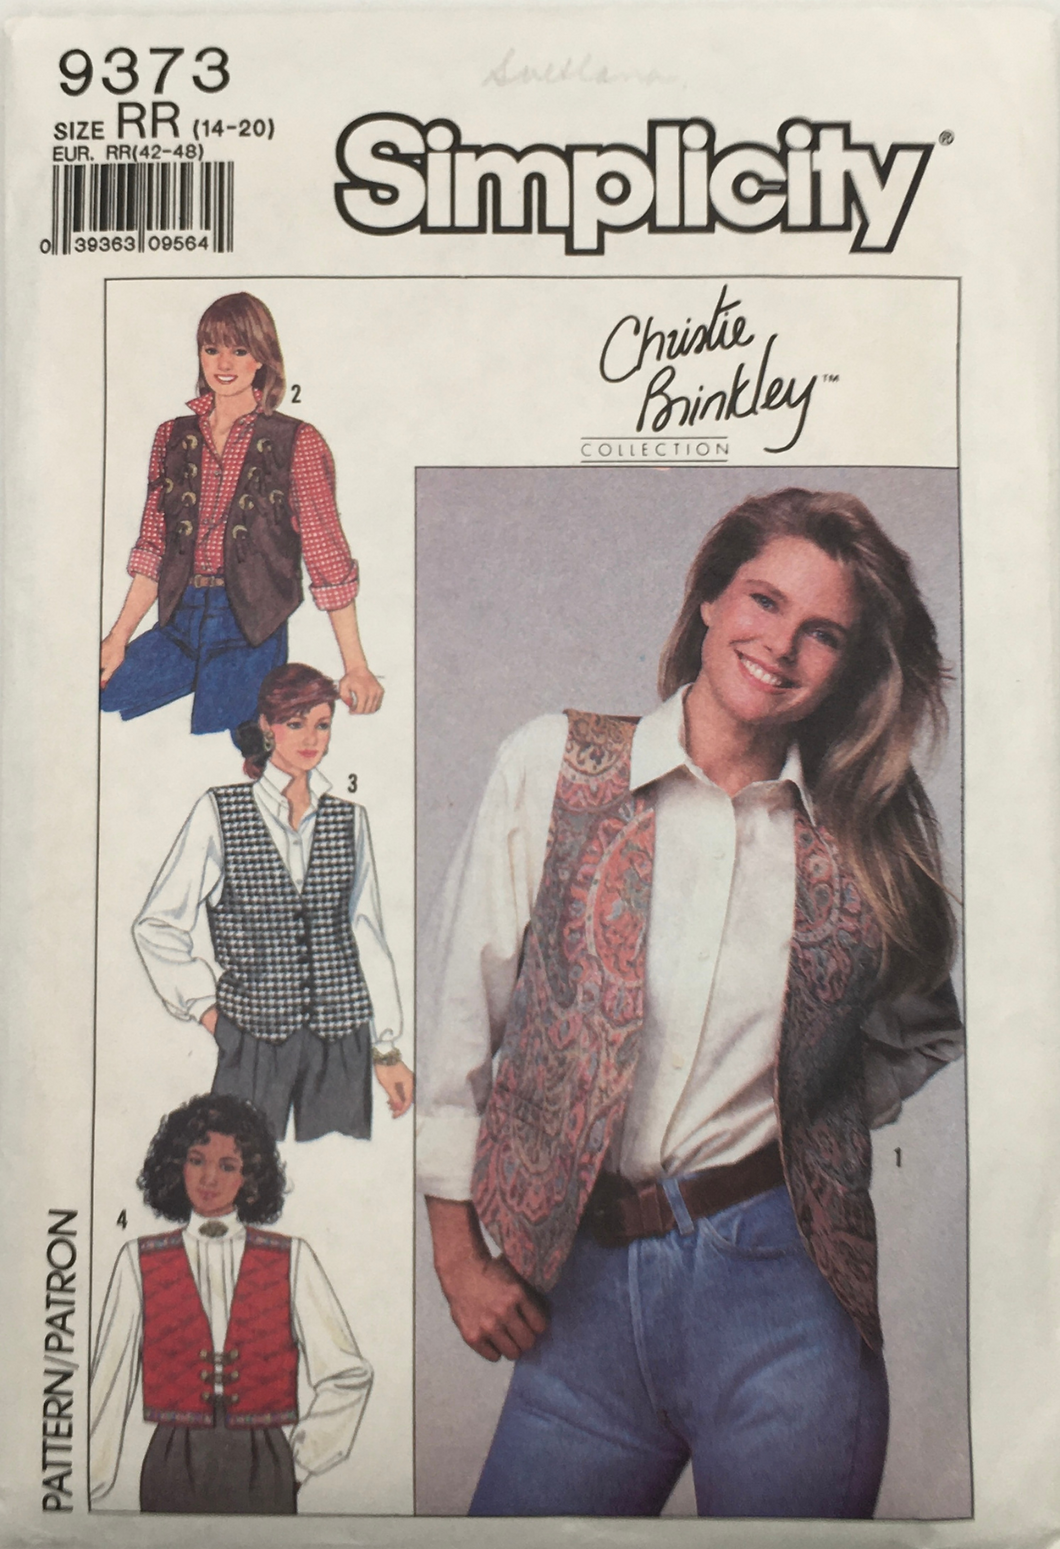 1989 Vintage Sewing Pattern: Simplicity  9373